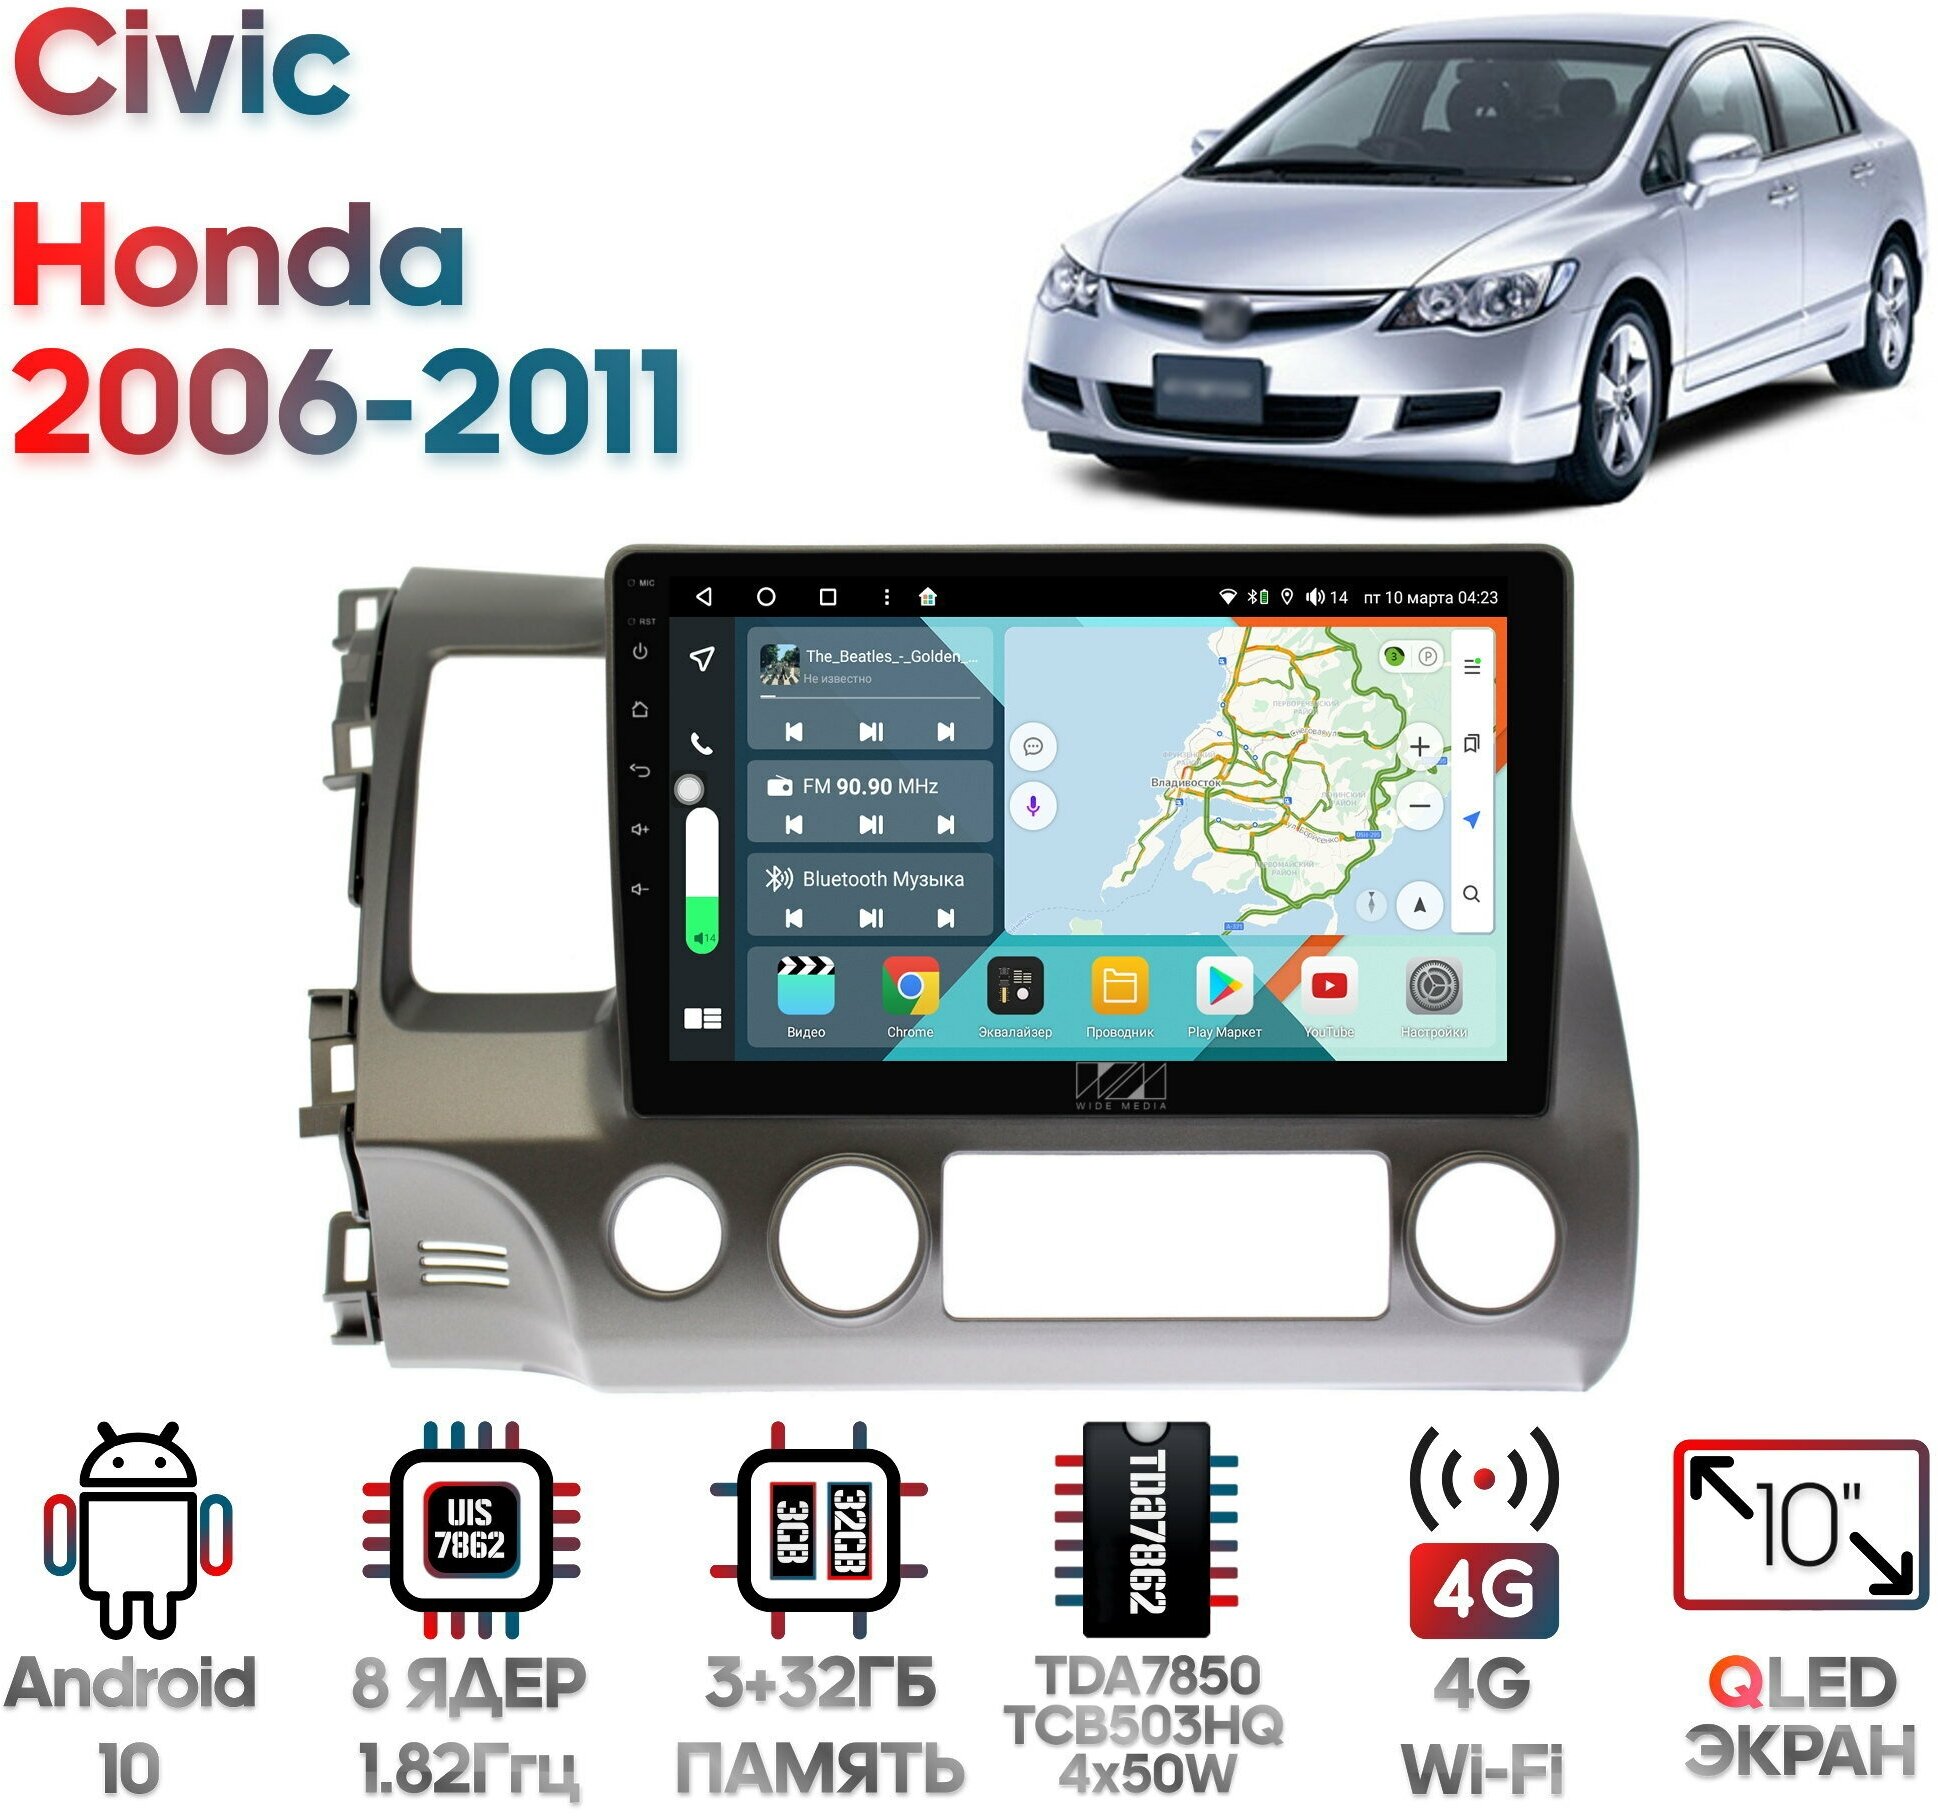 Штатная магнитола Wide Media Honda Civic (седан) 2006 - 2011[Android 10, 10 дюймов, 3/32GB, 8 ядер, TDA7850, DSP, SPDIF, QLED, 1280*720]